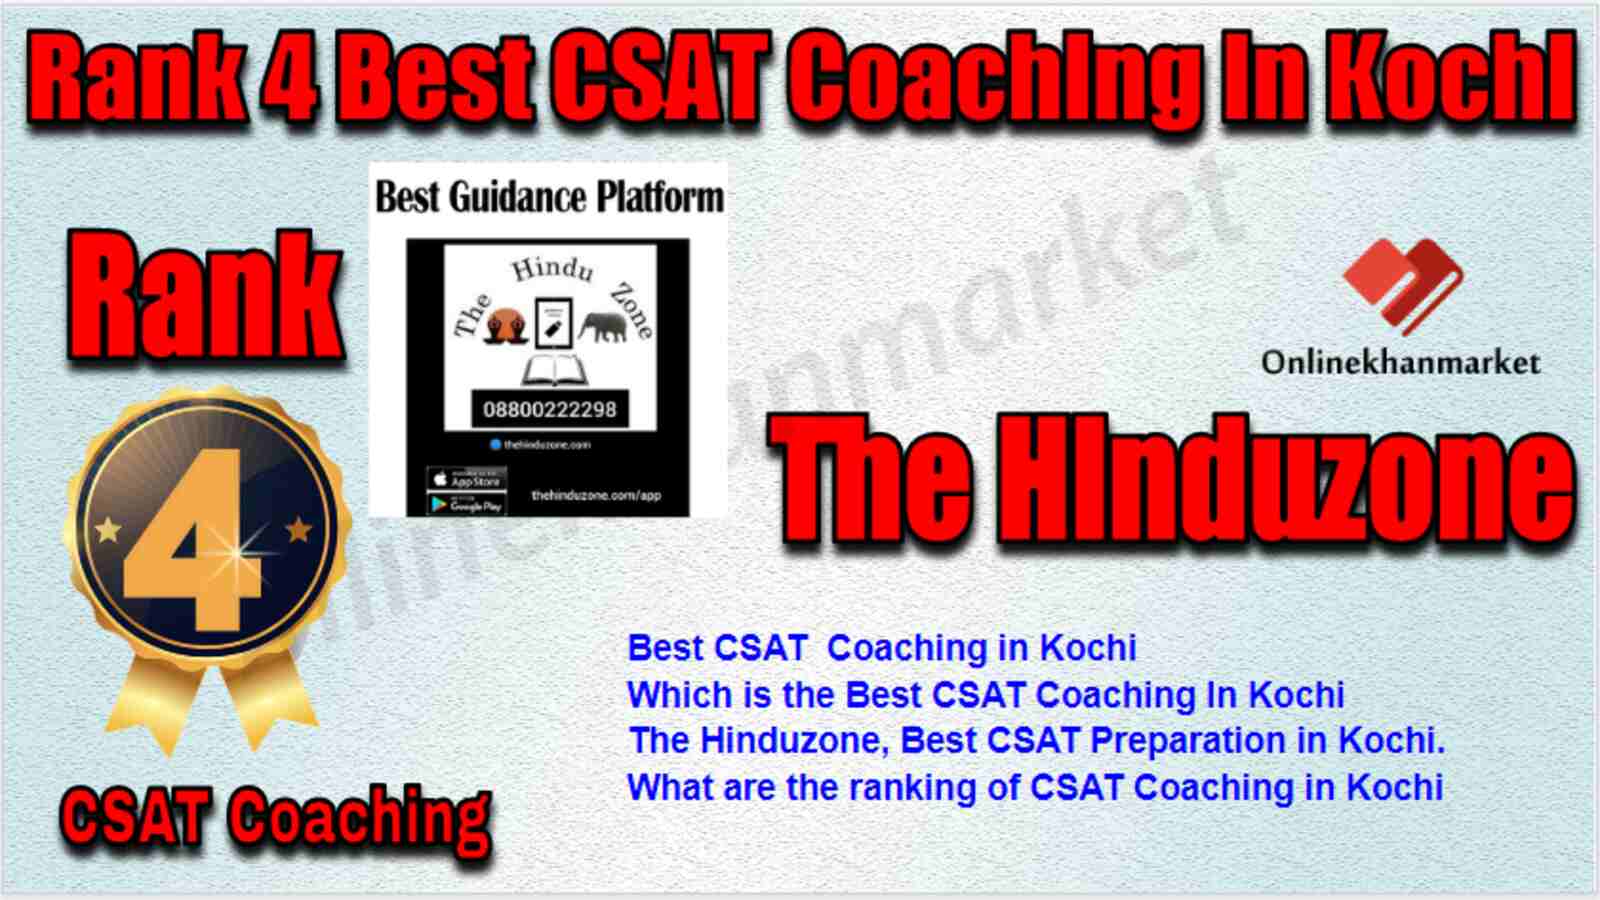 Rank 4 Best CSAT Coaching in Kochi